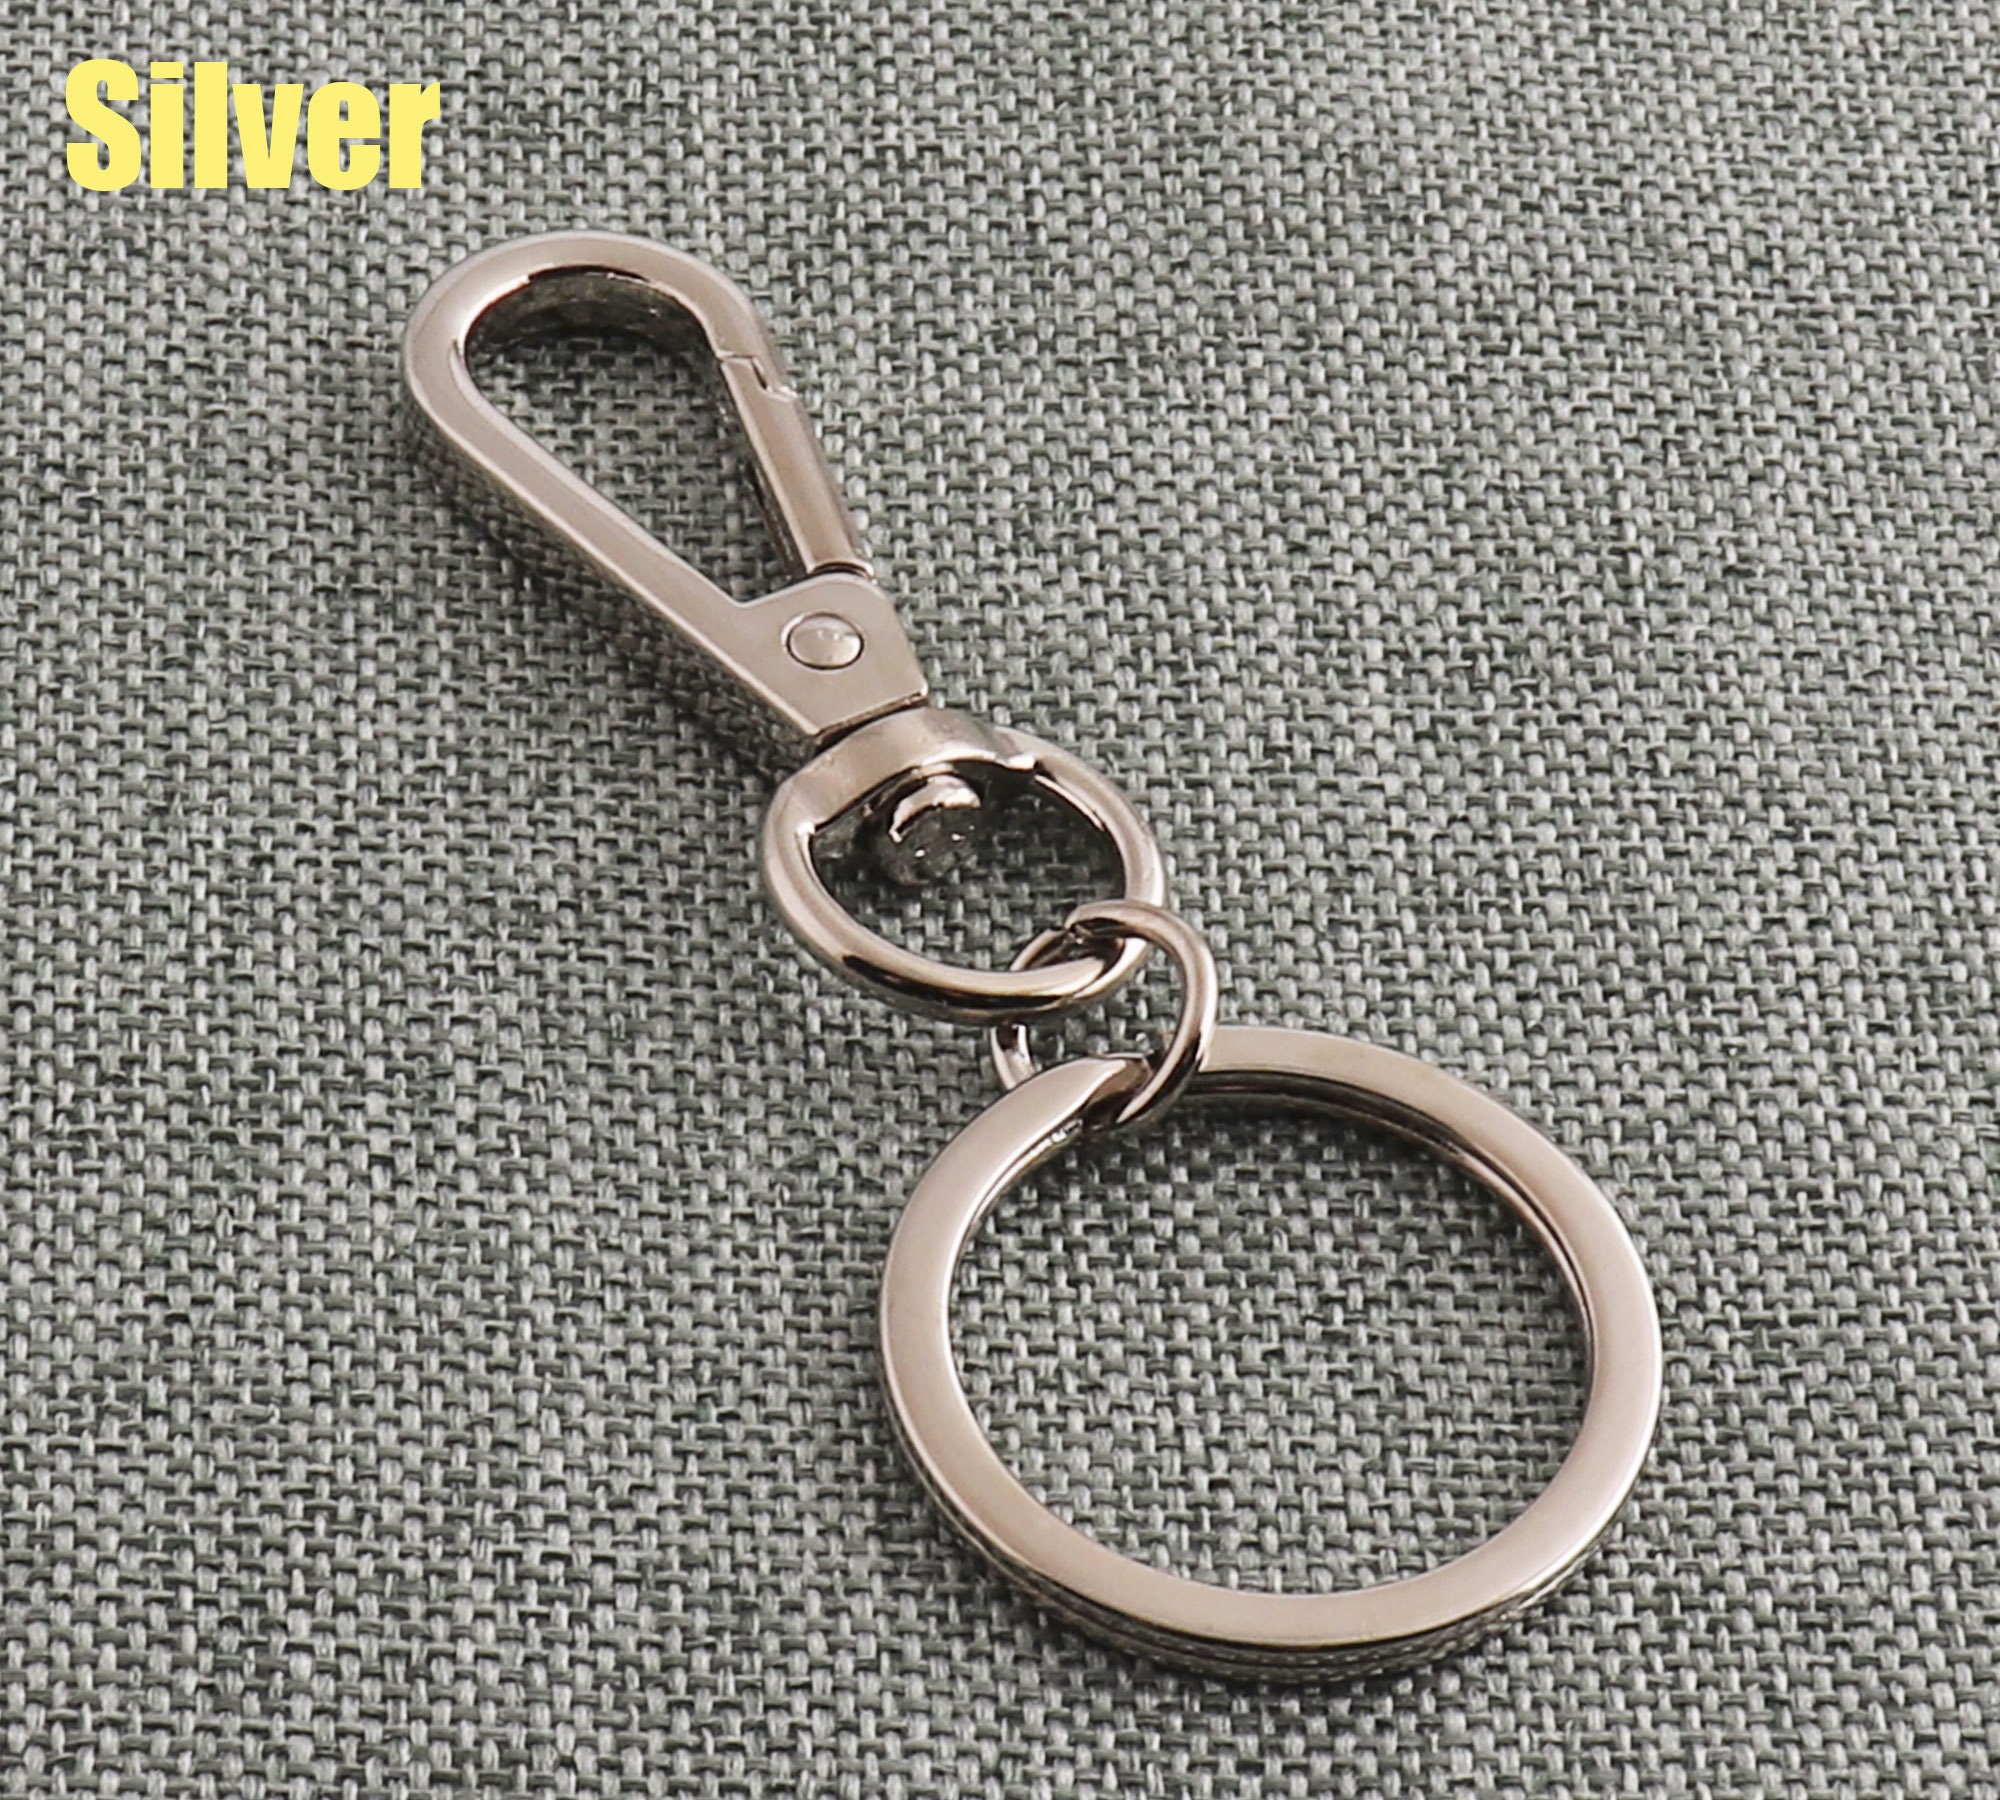 Large Key Chain 79mm Key Ring With Lobster Swivel Clasps Gunmetal//Light Gold/Silver/Gold Keychain Charm Bulk Swivel Snap Hook-2/6pcs